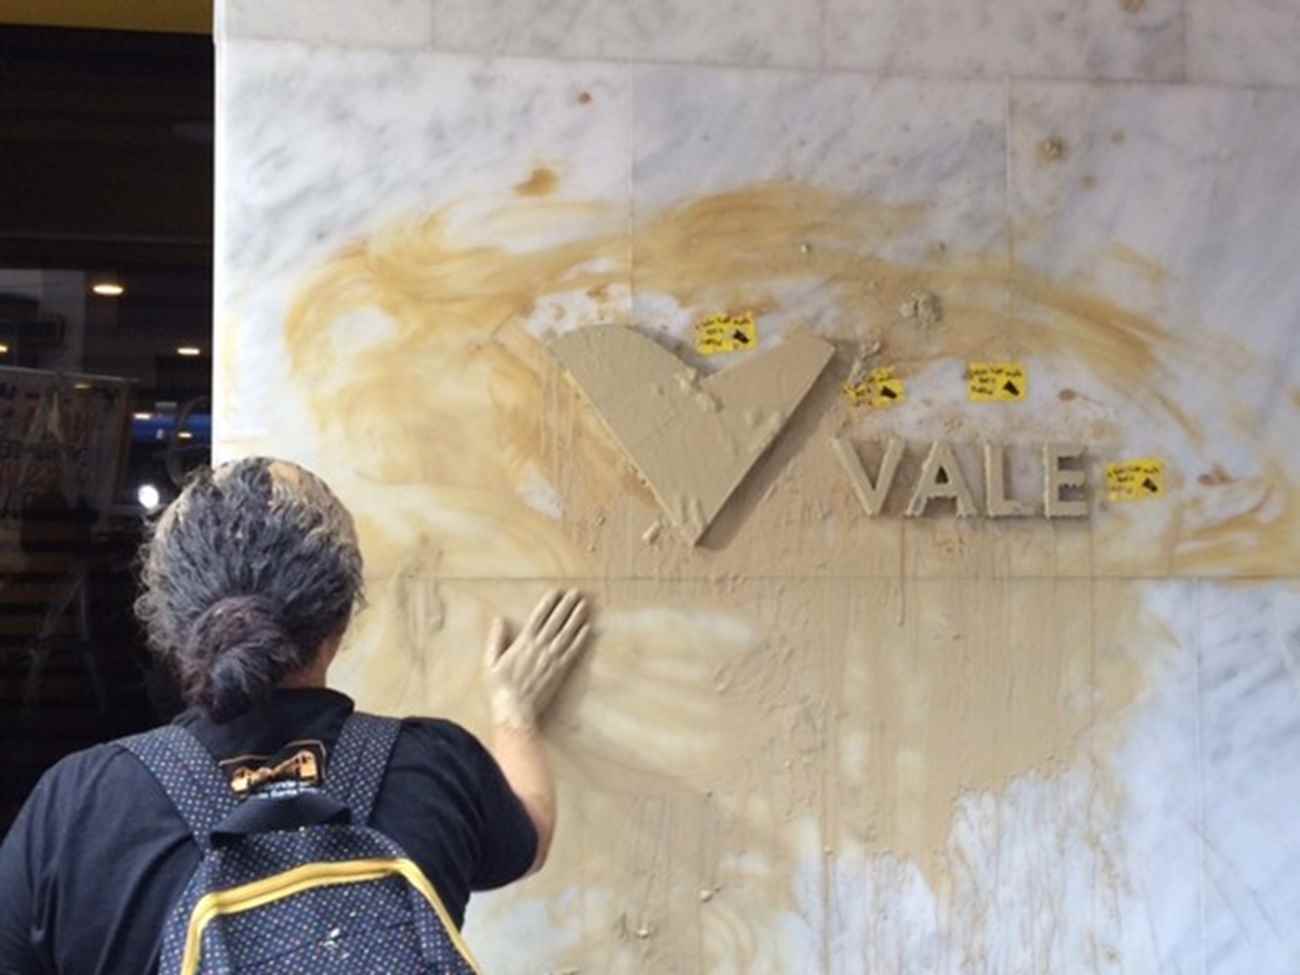 Manifestante suja parede da sede da Vale, no Centro do Rio (Foto: Cristina Boeckel/G1)